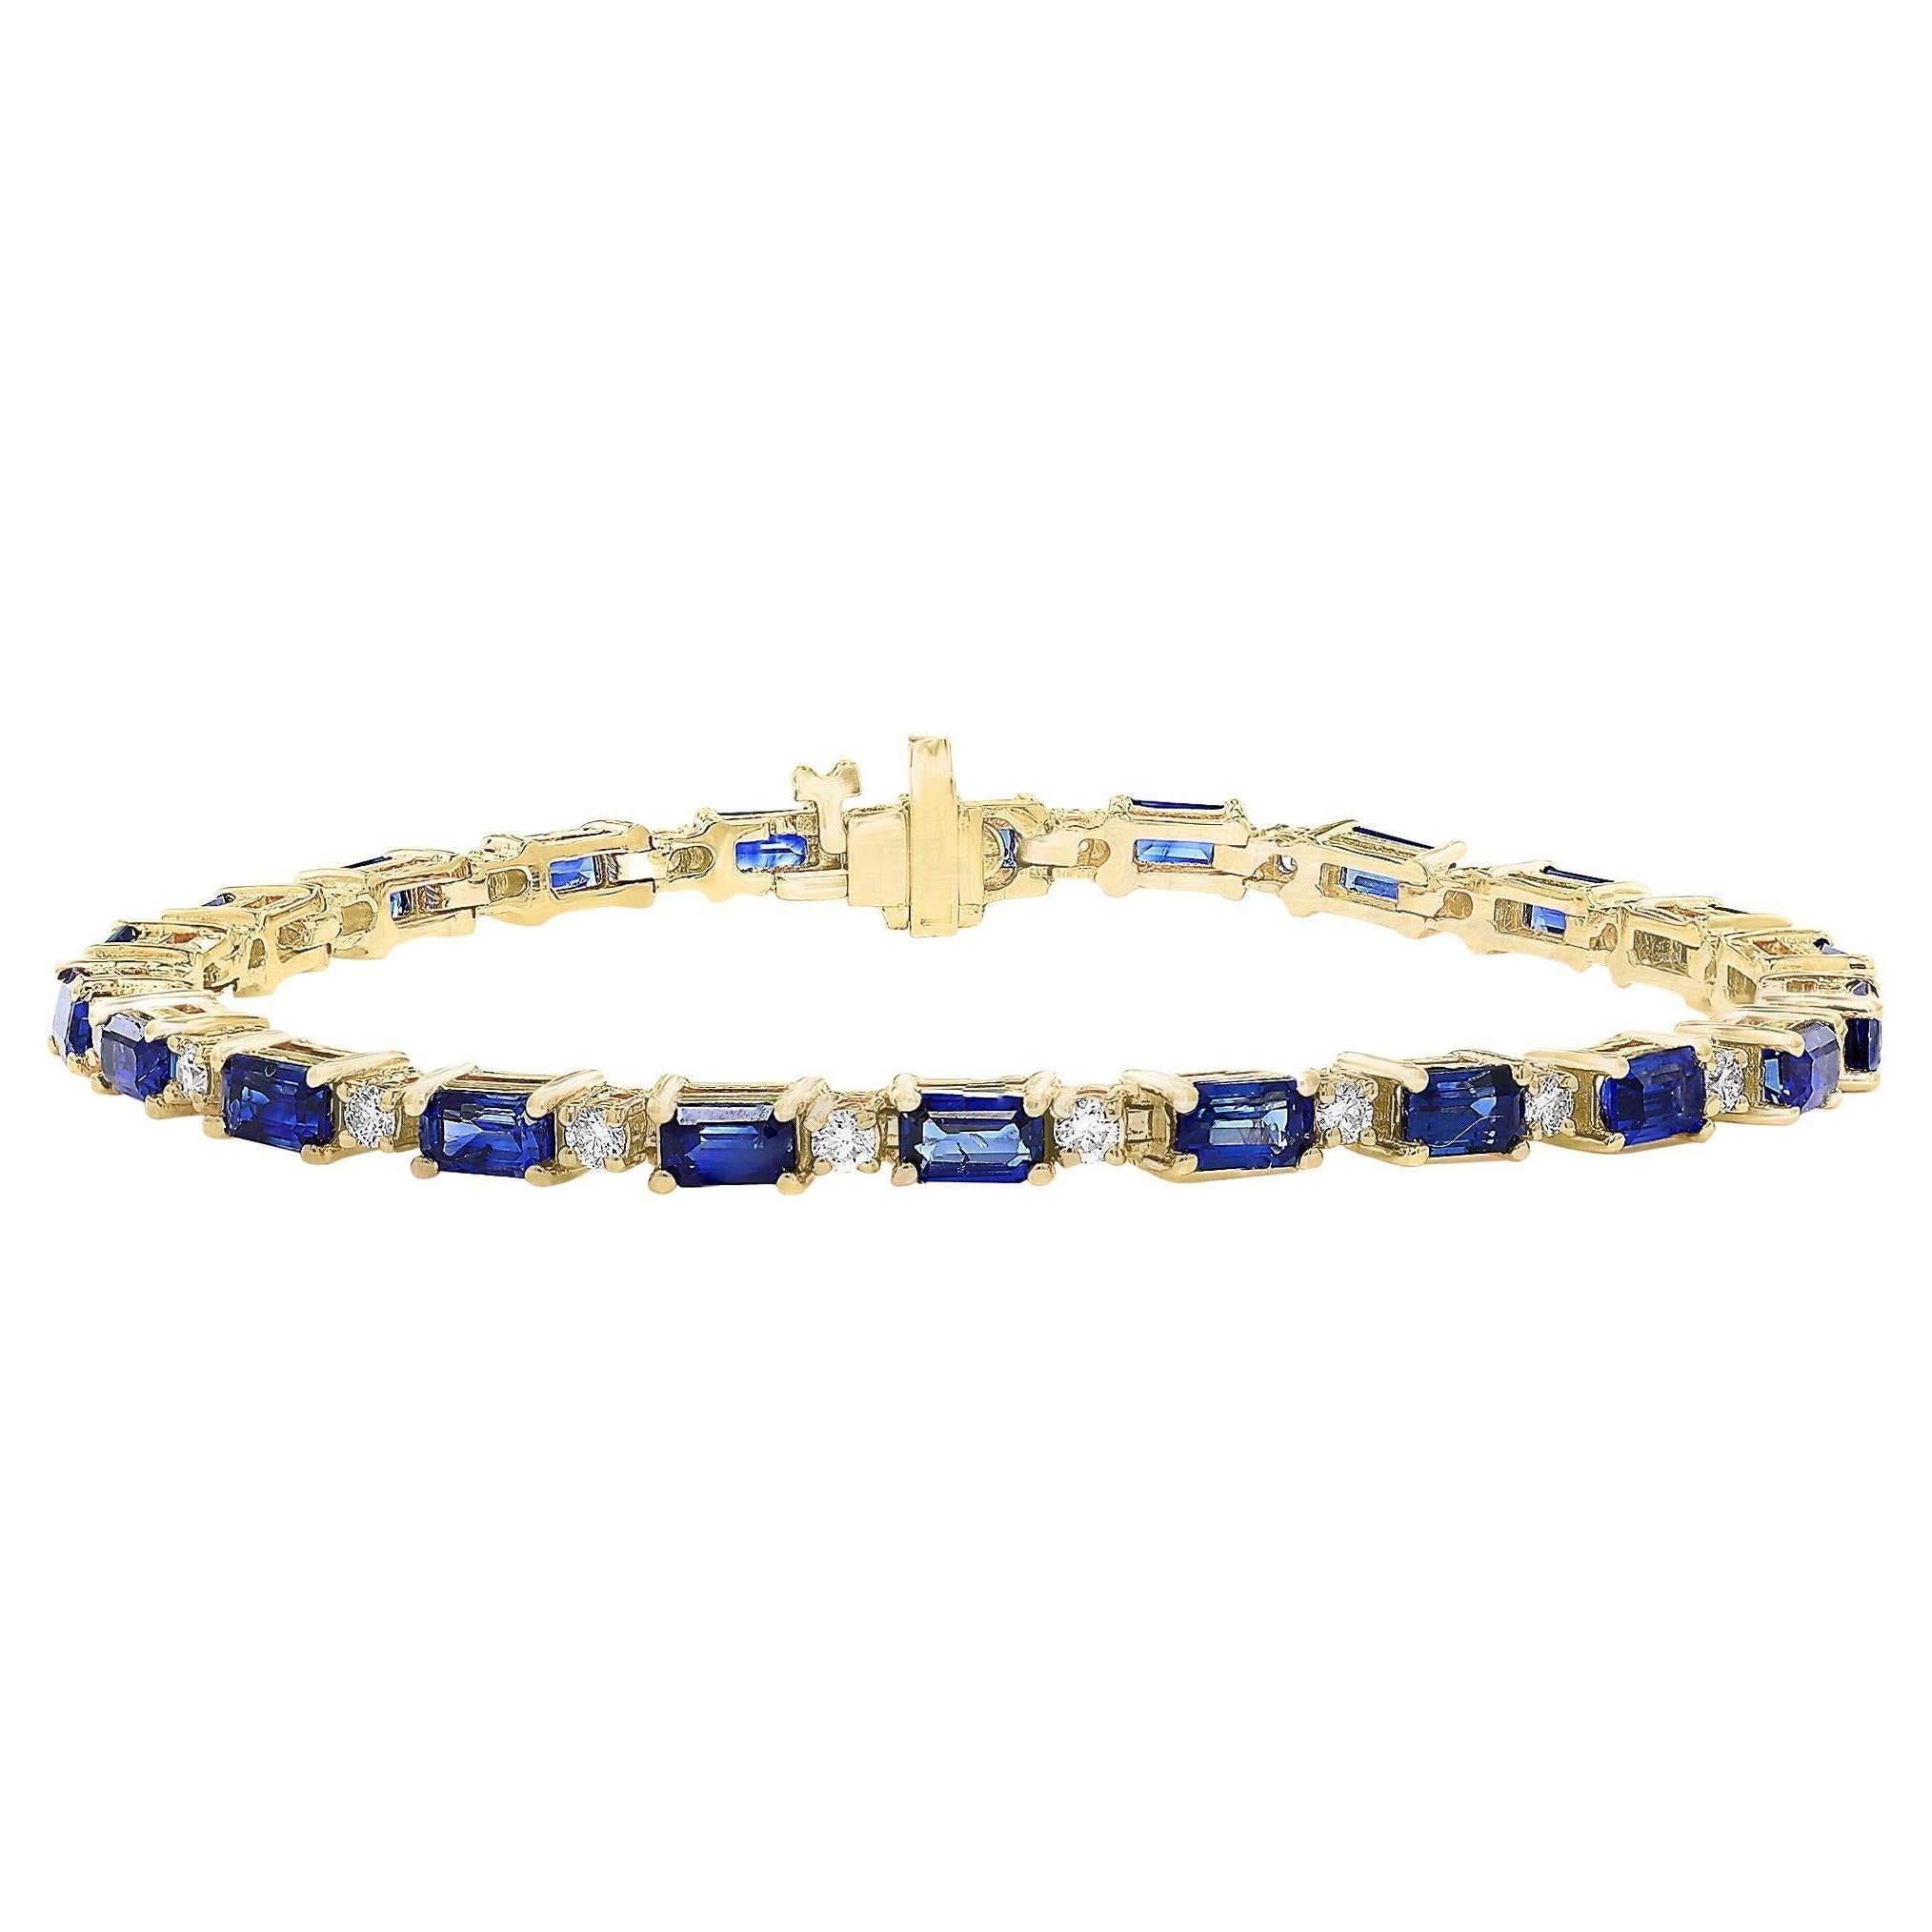 8.99 Carat Emerald Cut Blue Sapphire and Diamond Bracelet in 14K White Gold